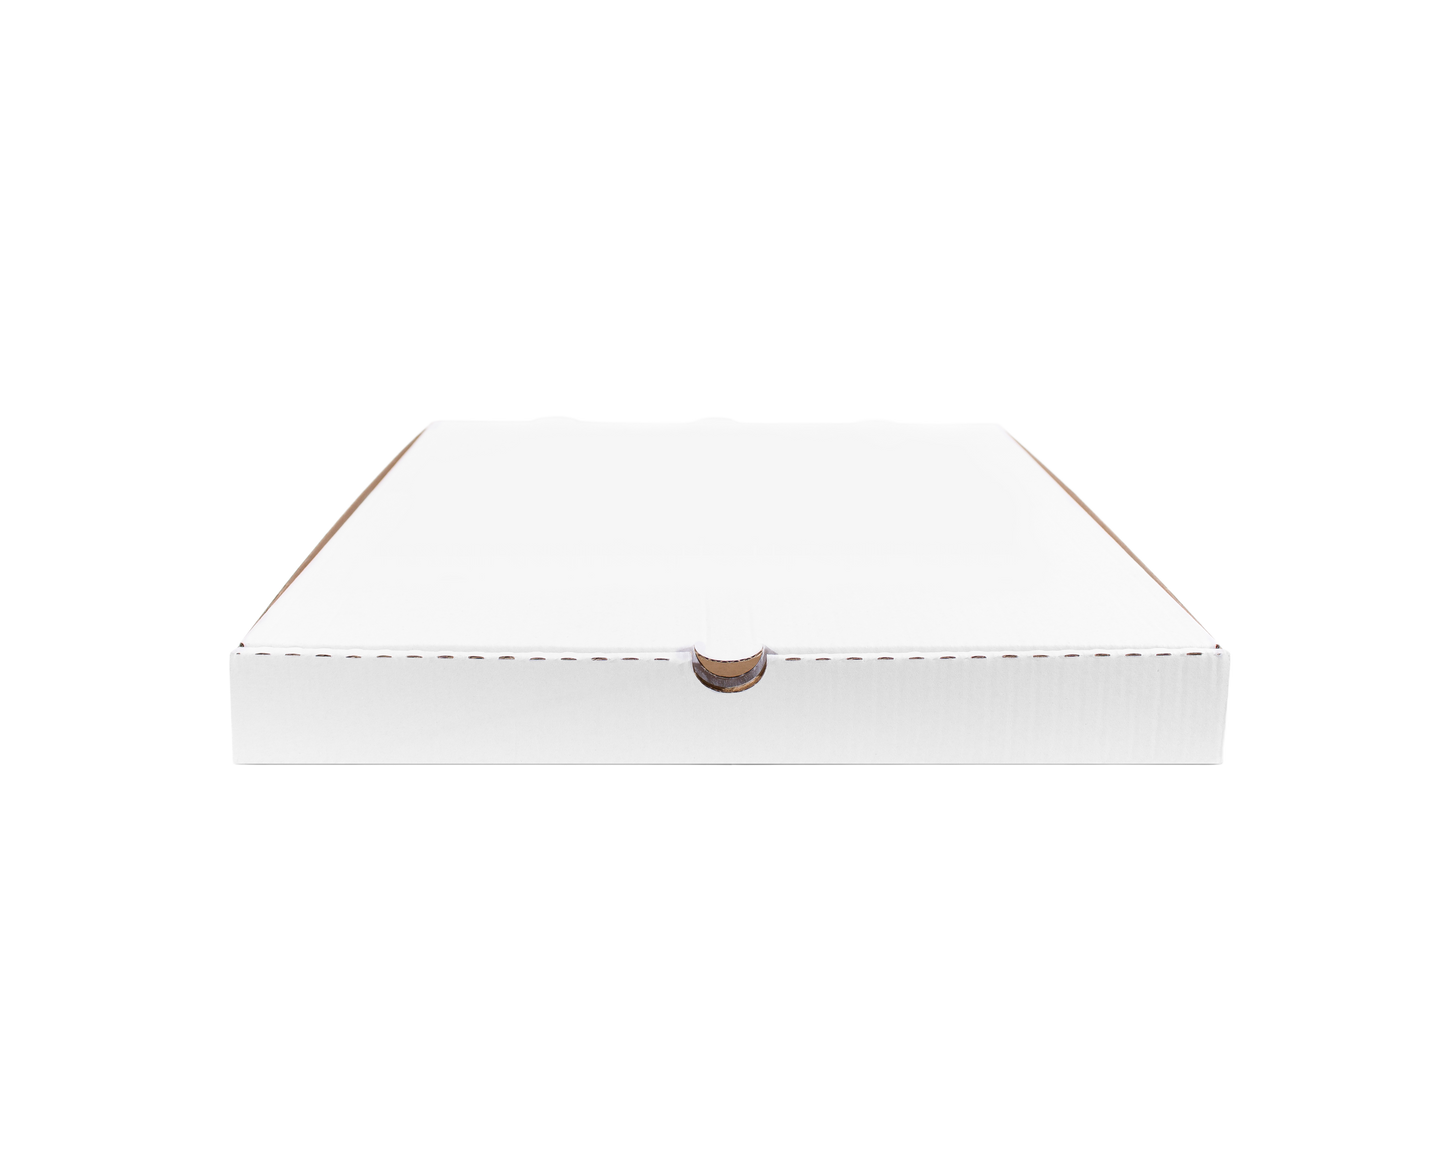 Custom Pizza Boxes - 18" x 18" x 2" - 50/Bundle